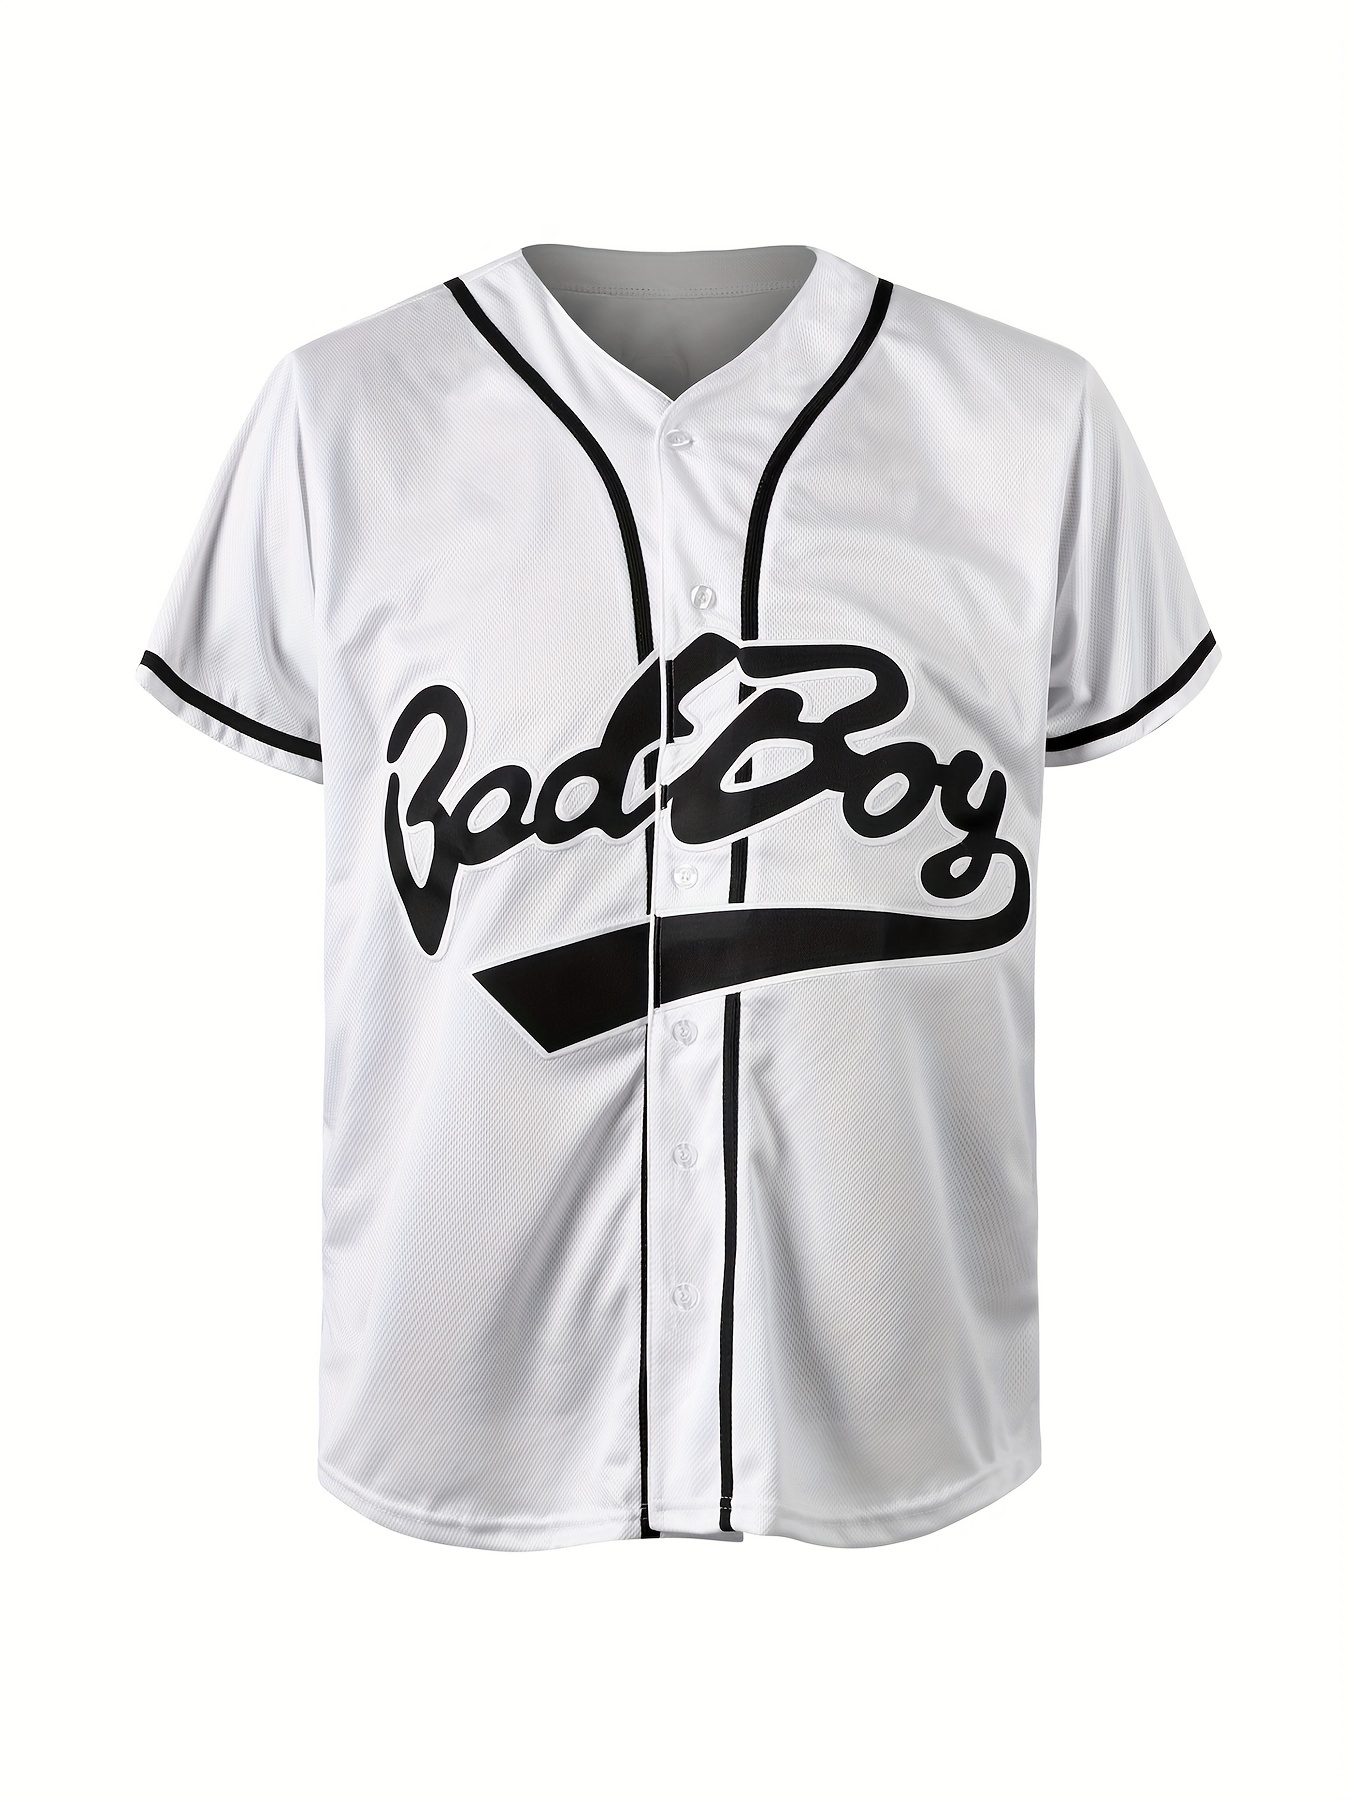  Bad Boy 10 Baseball Jersey, 90s Hip Hop Men Clothing